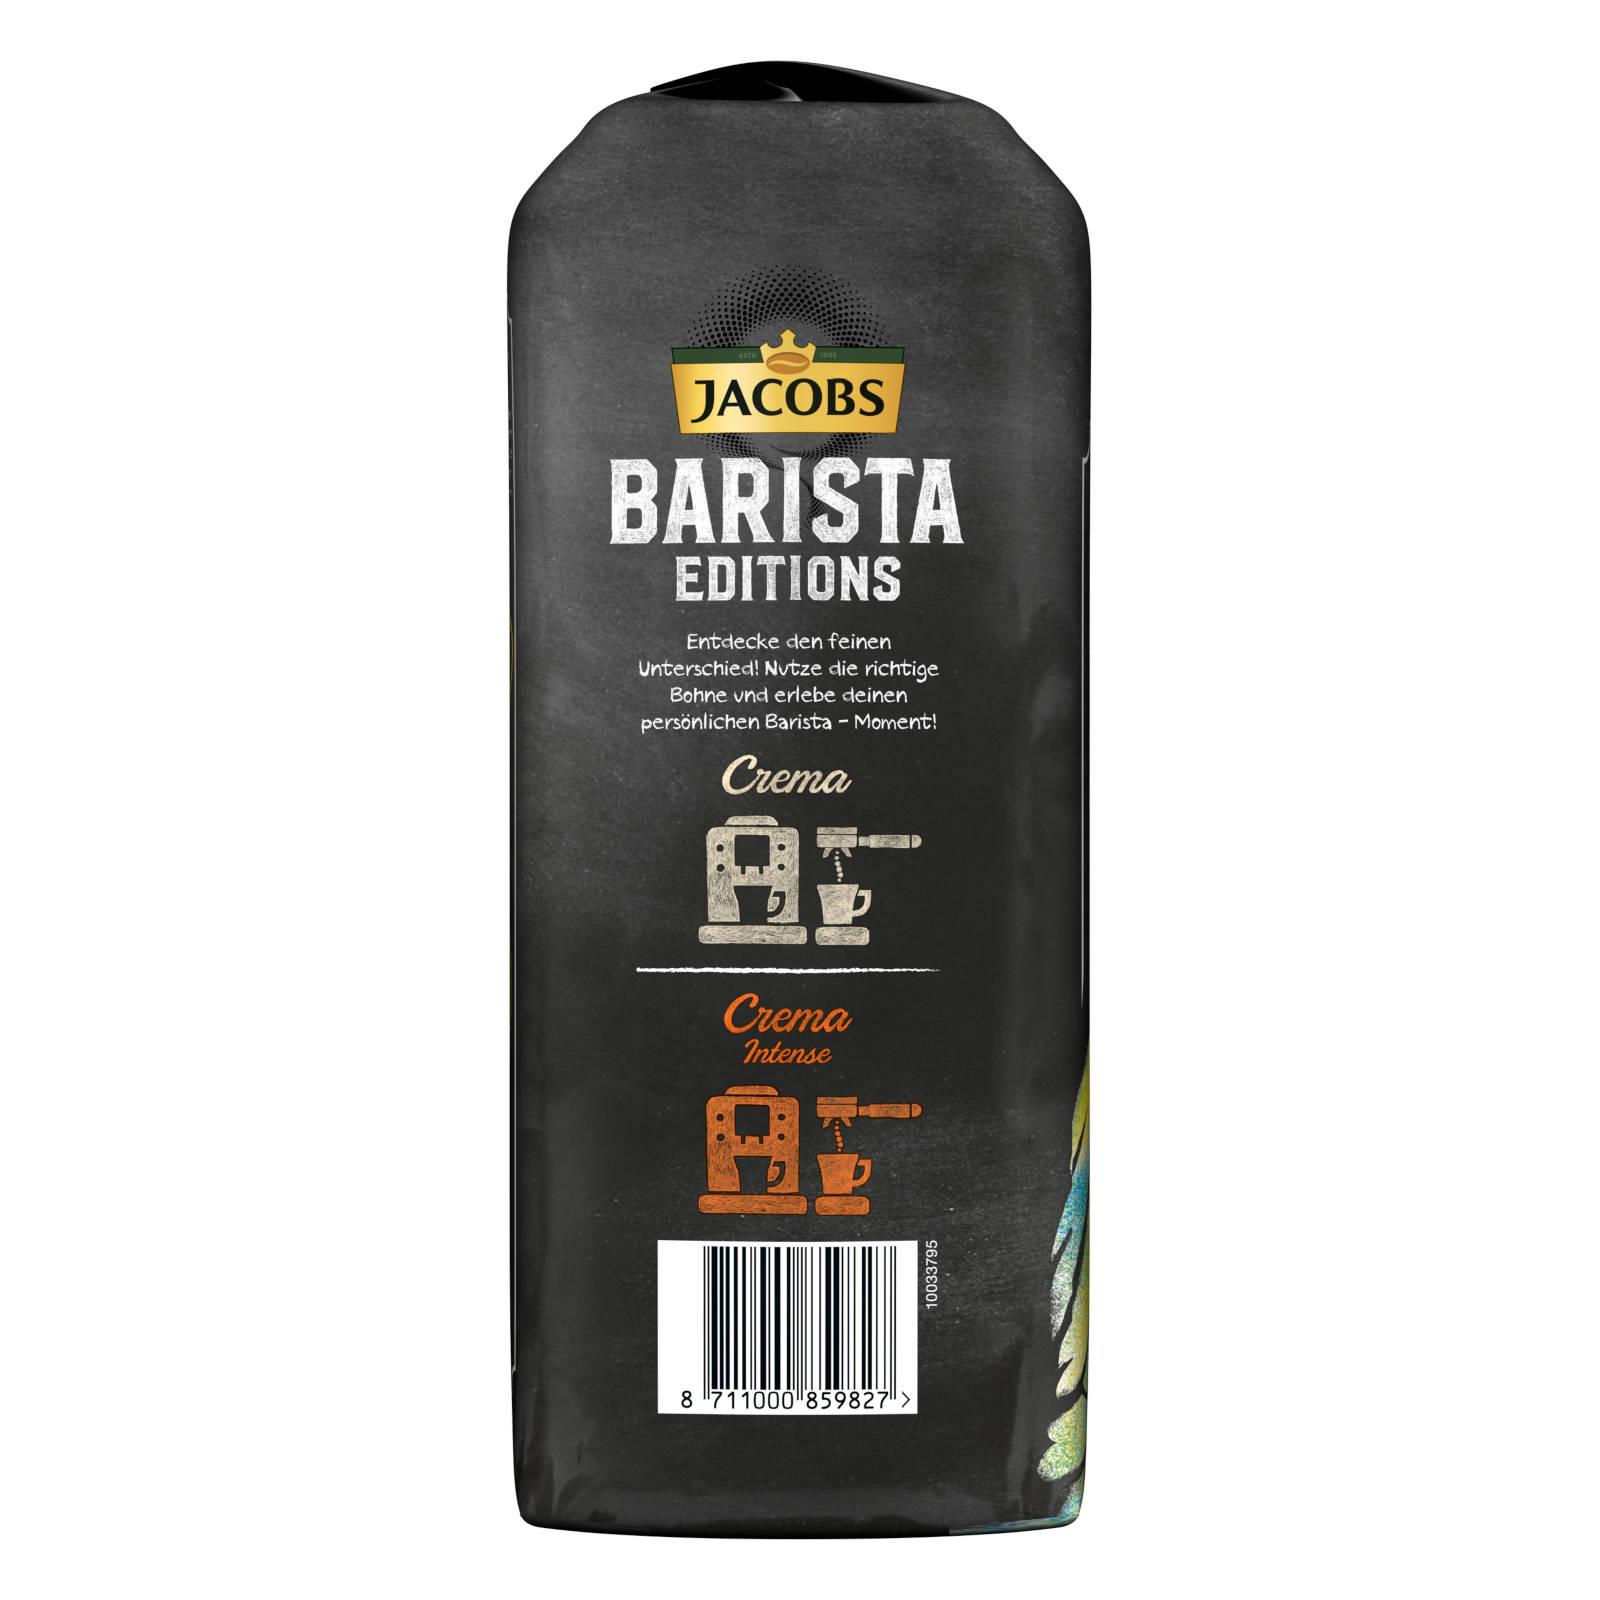 Brasilien Selektion Editions 1 geröstete 4 Kaffeebohnen Jahres ganze Barista des x (Kaffeevollautomat) JACOBS kg